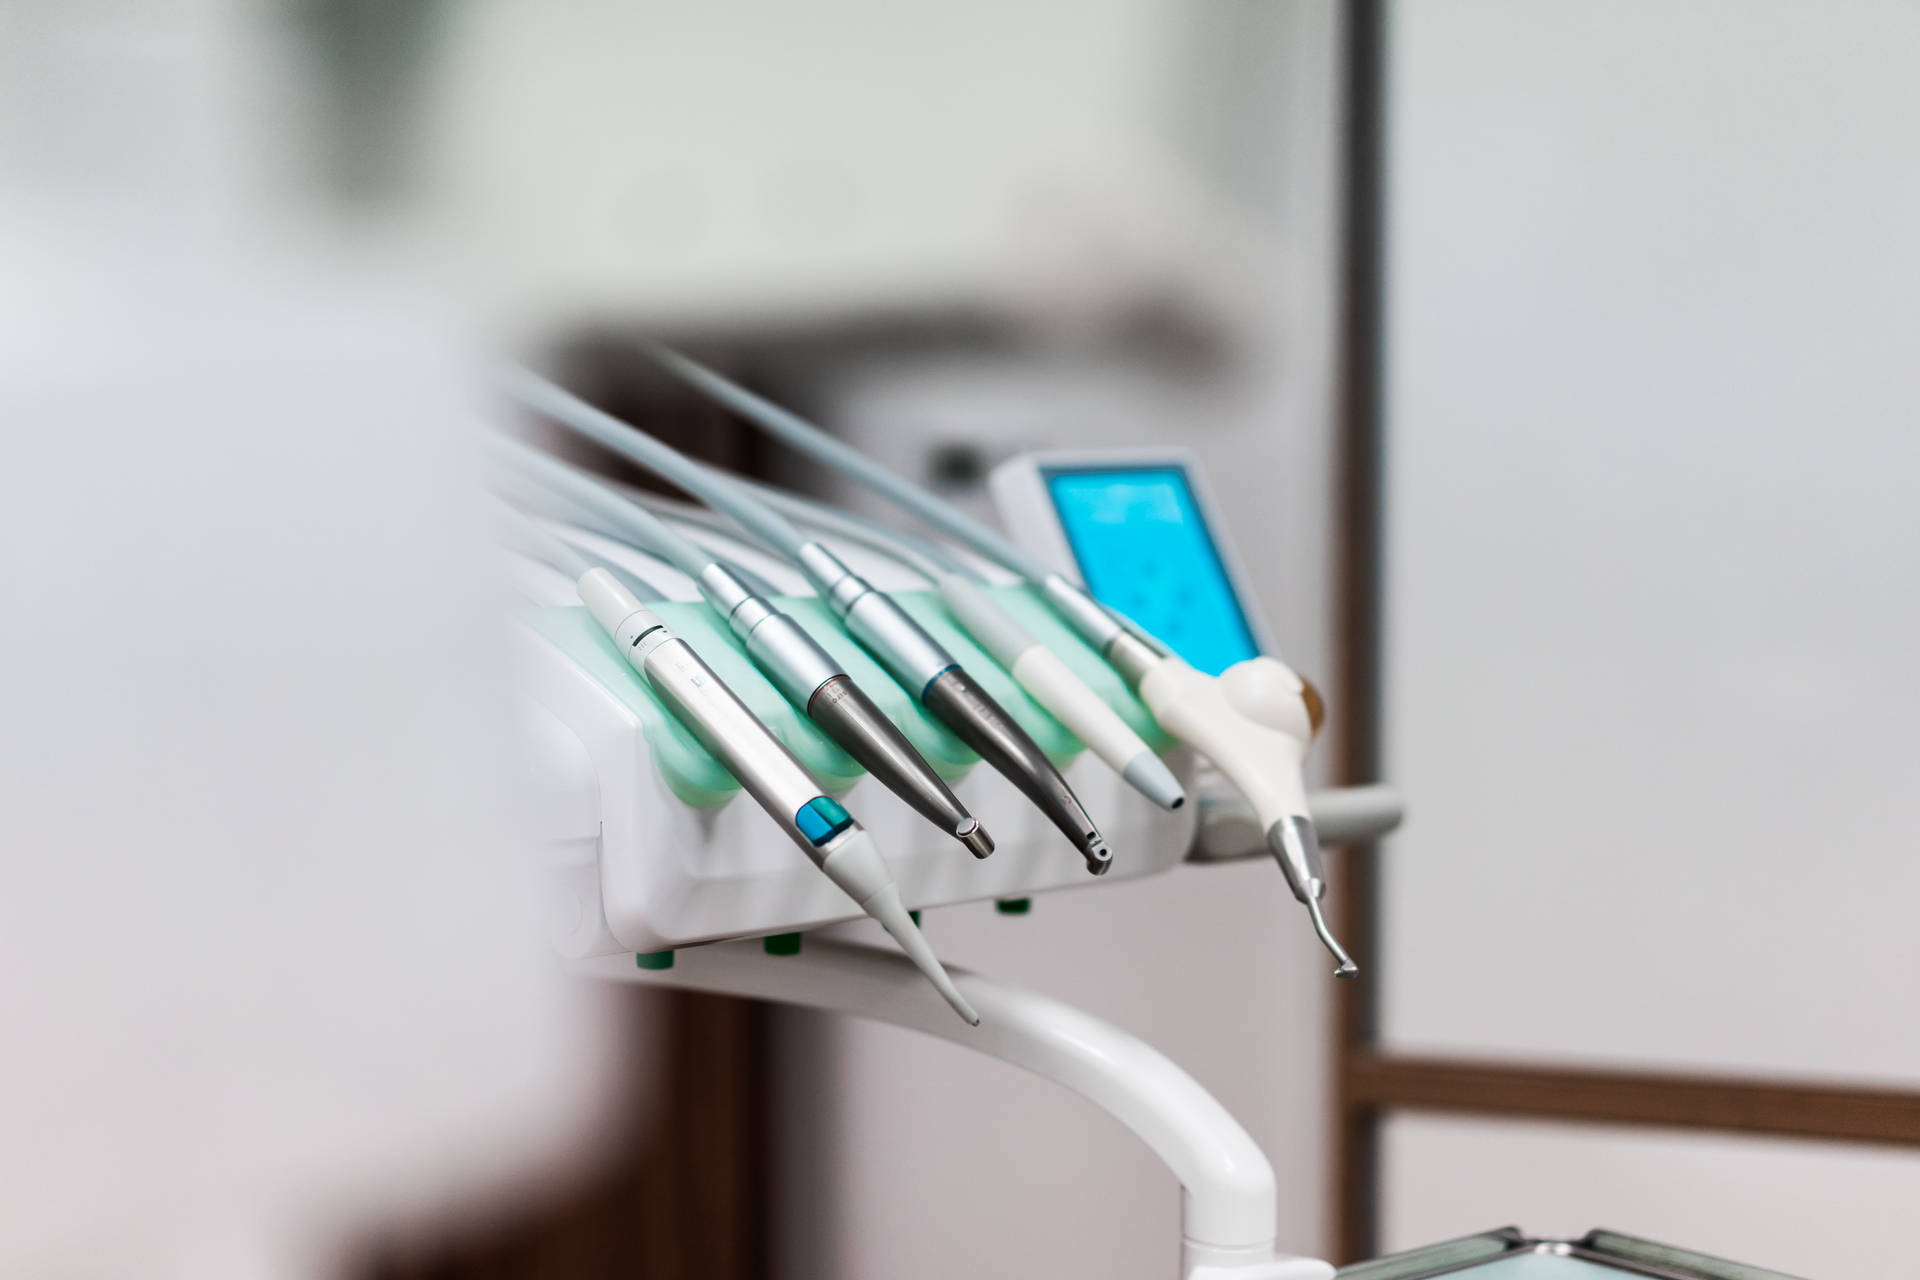 Dentistry Tools On Tool Tray Wallpaper